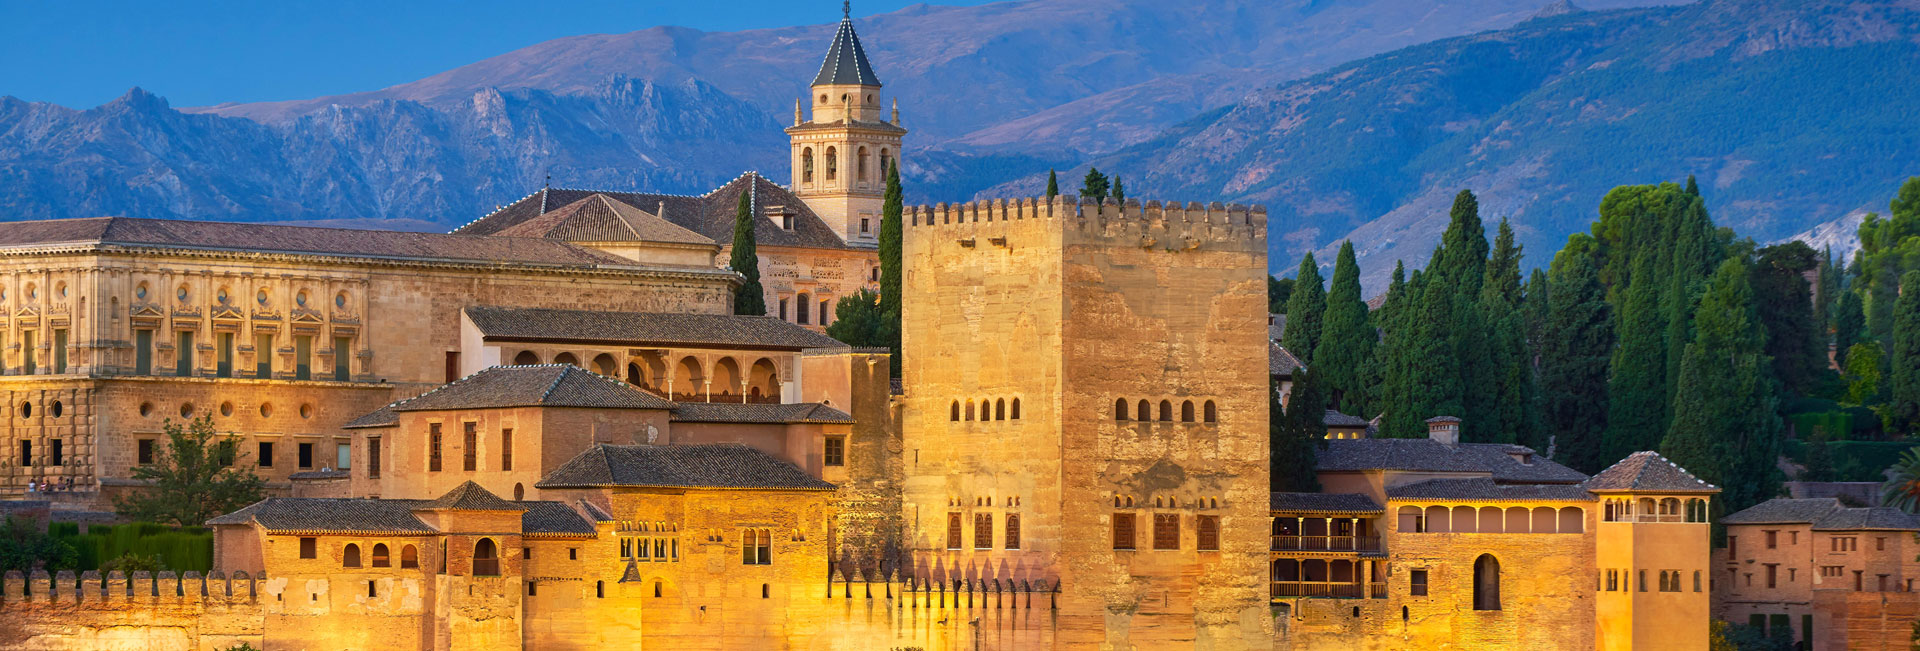 Granada: tesoro del sur con la alhambra como joya